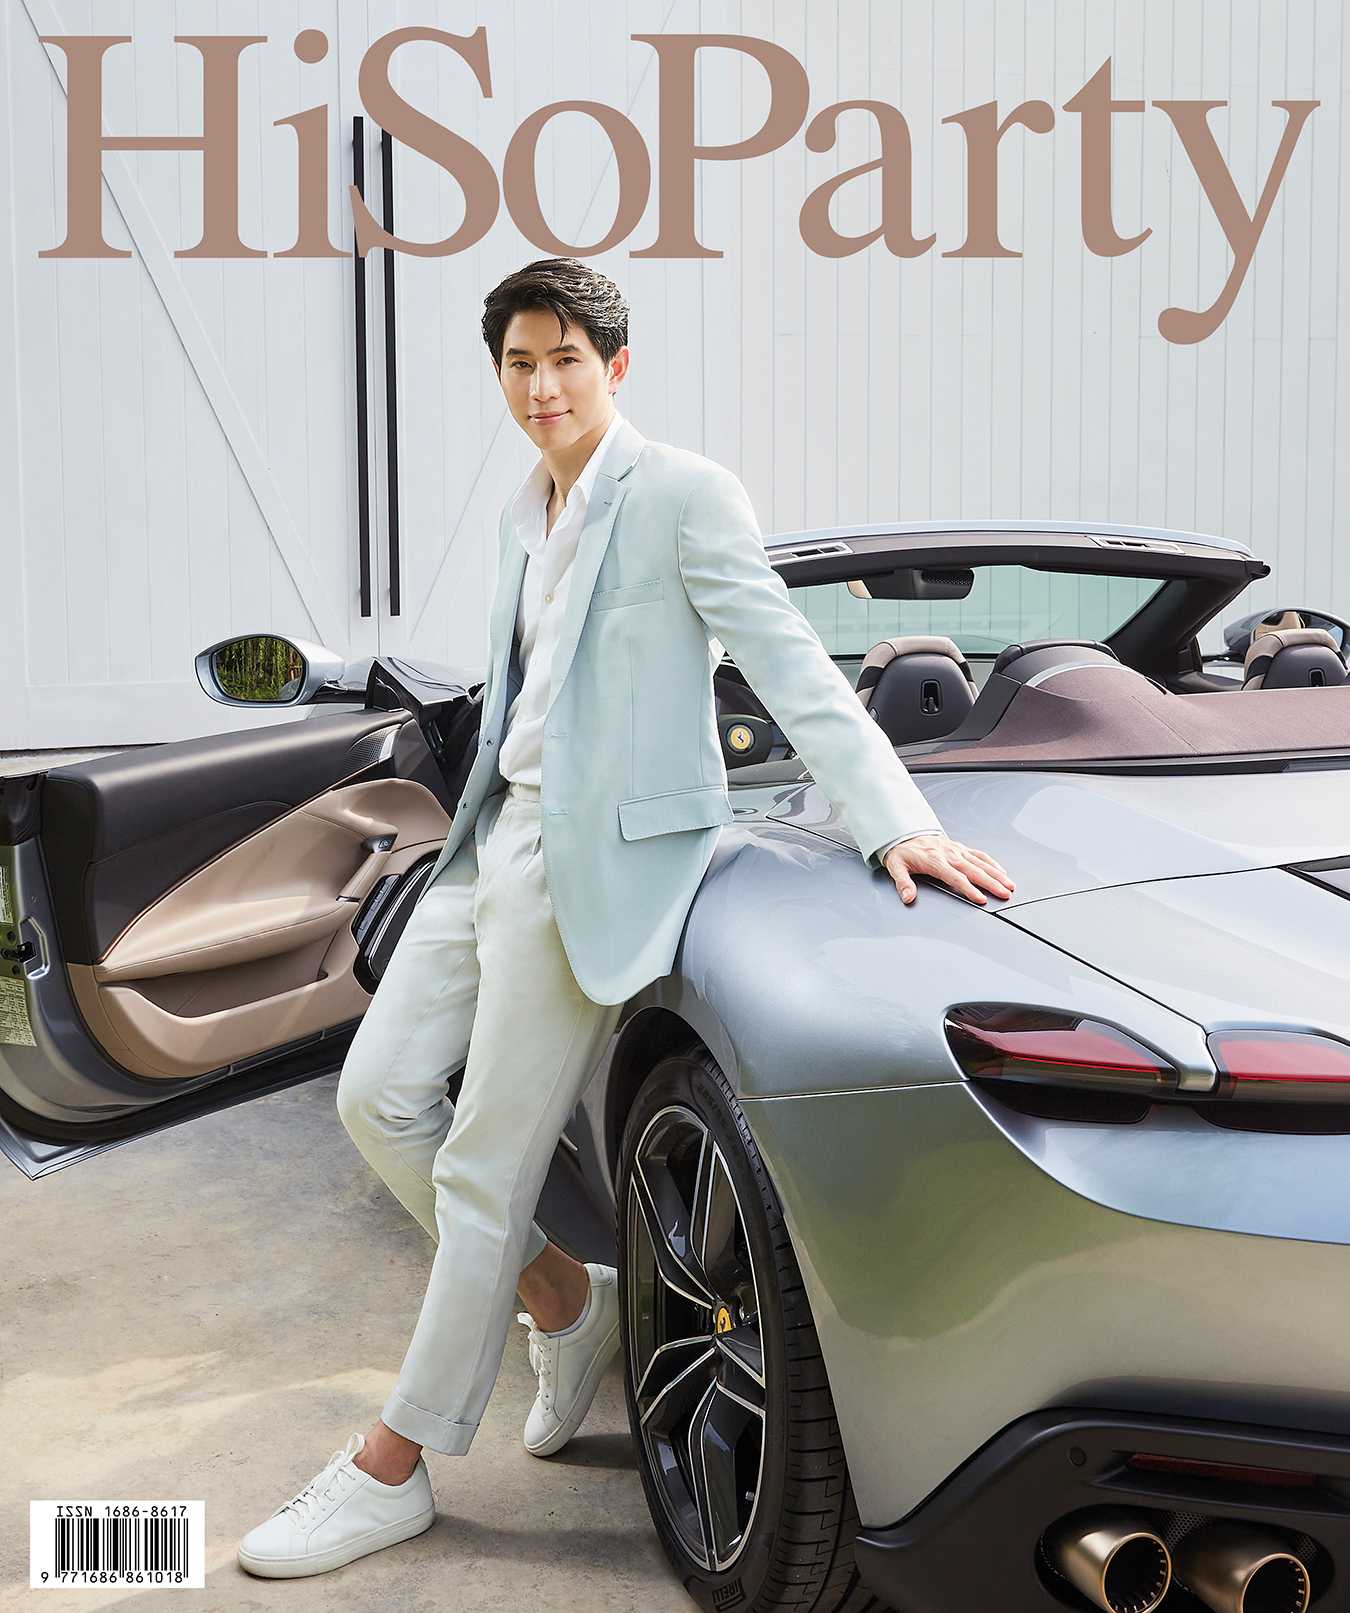 HiSoParty Magazine Vol.19 Issue 08 - 12/23 ฉบับเดือนธันวาคม 2566